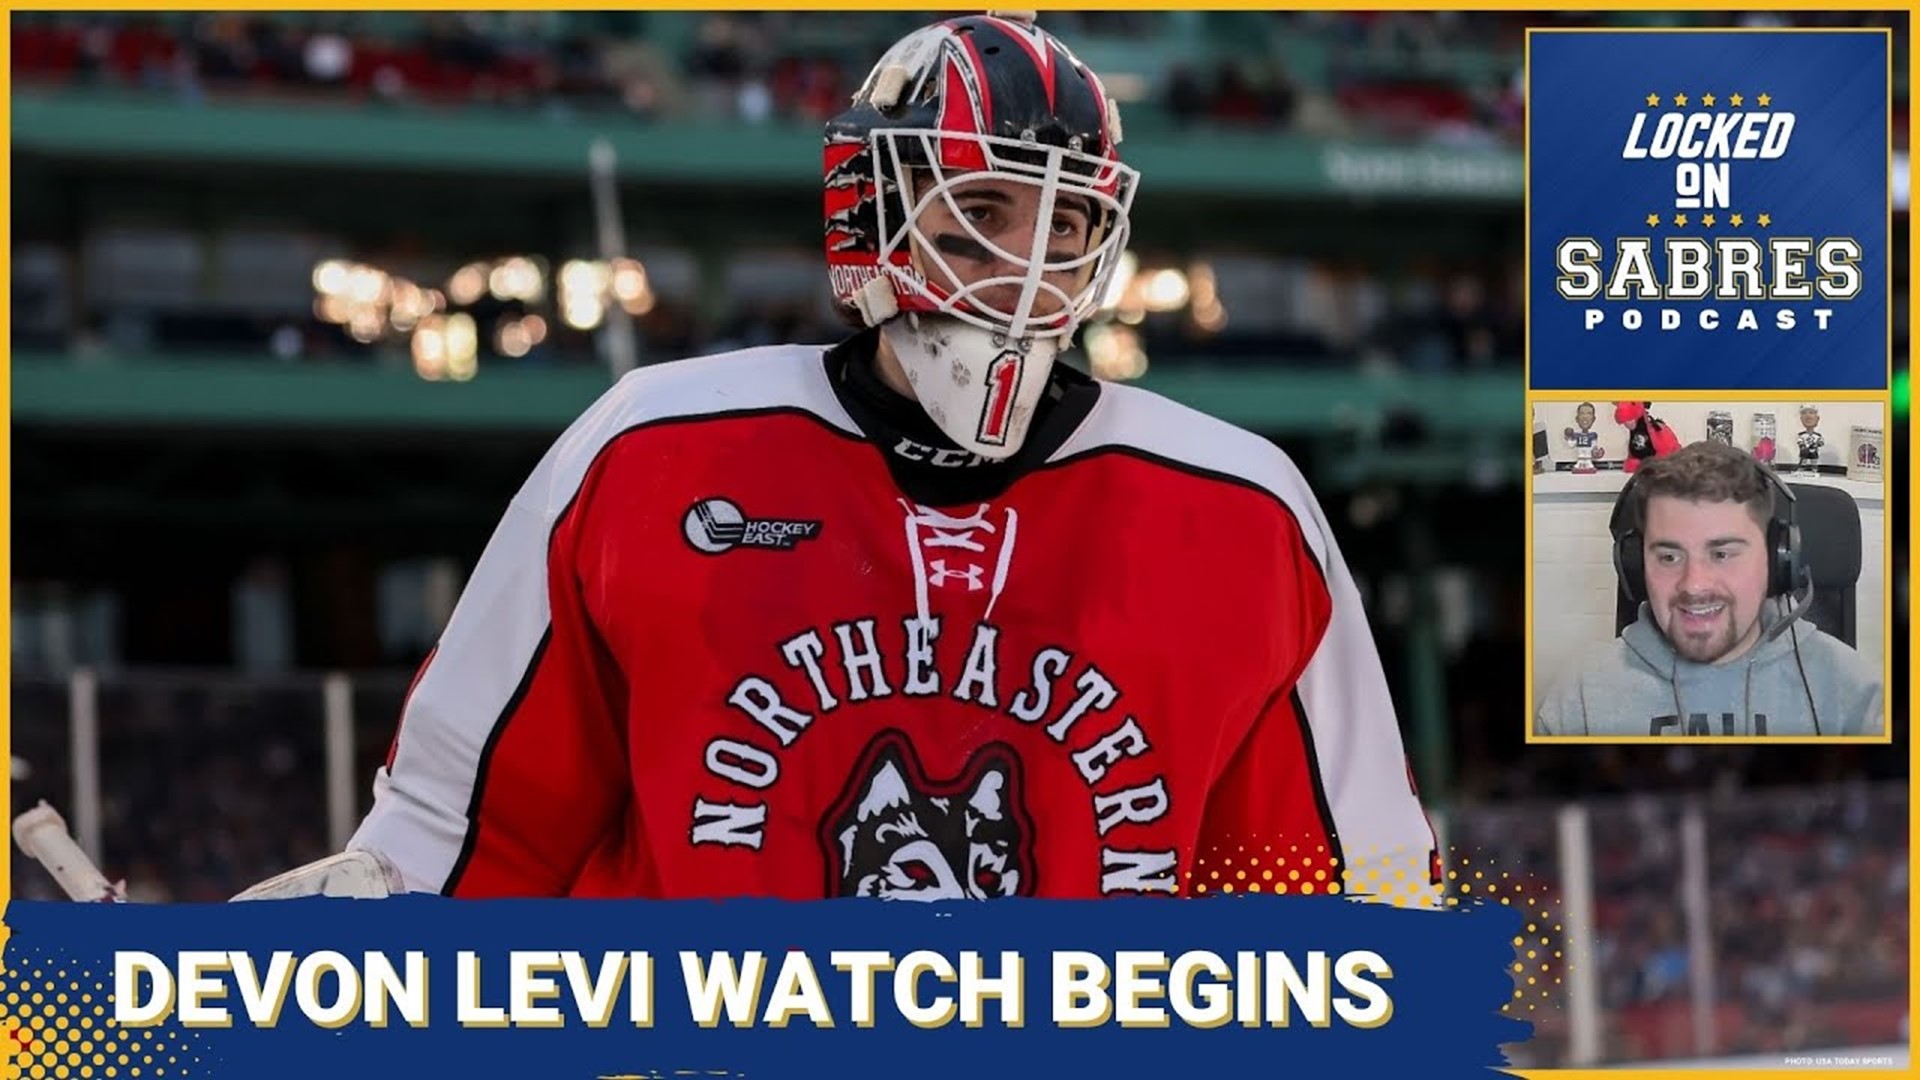 Devon Levi watch begins for the Sabres